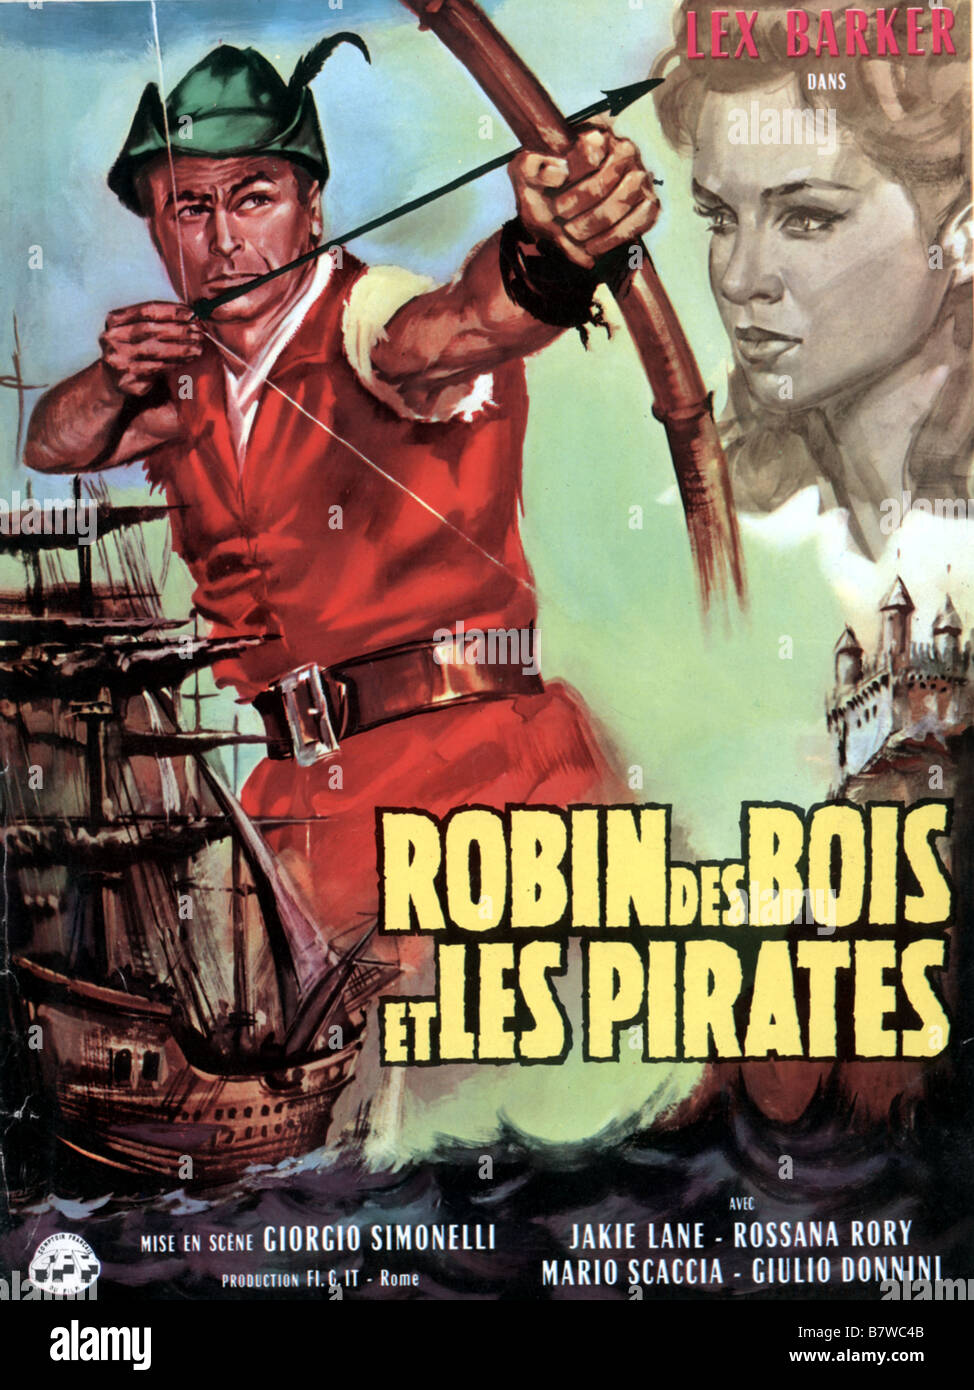 Robin hood e i pirati hi-res stock photography and images - Alamy